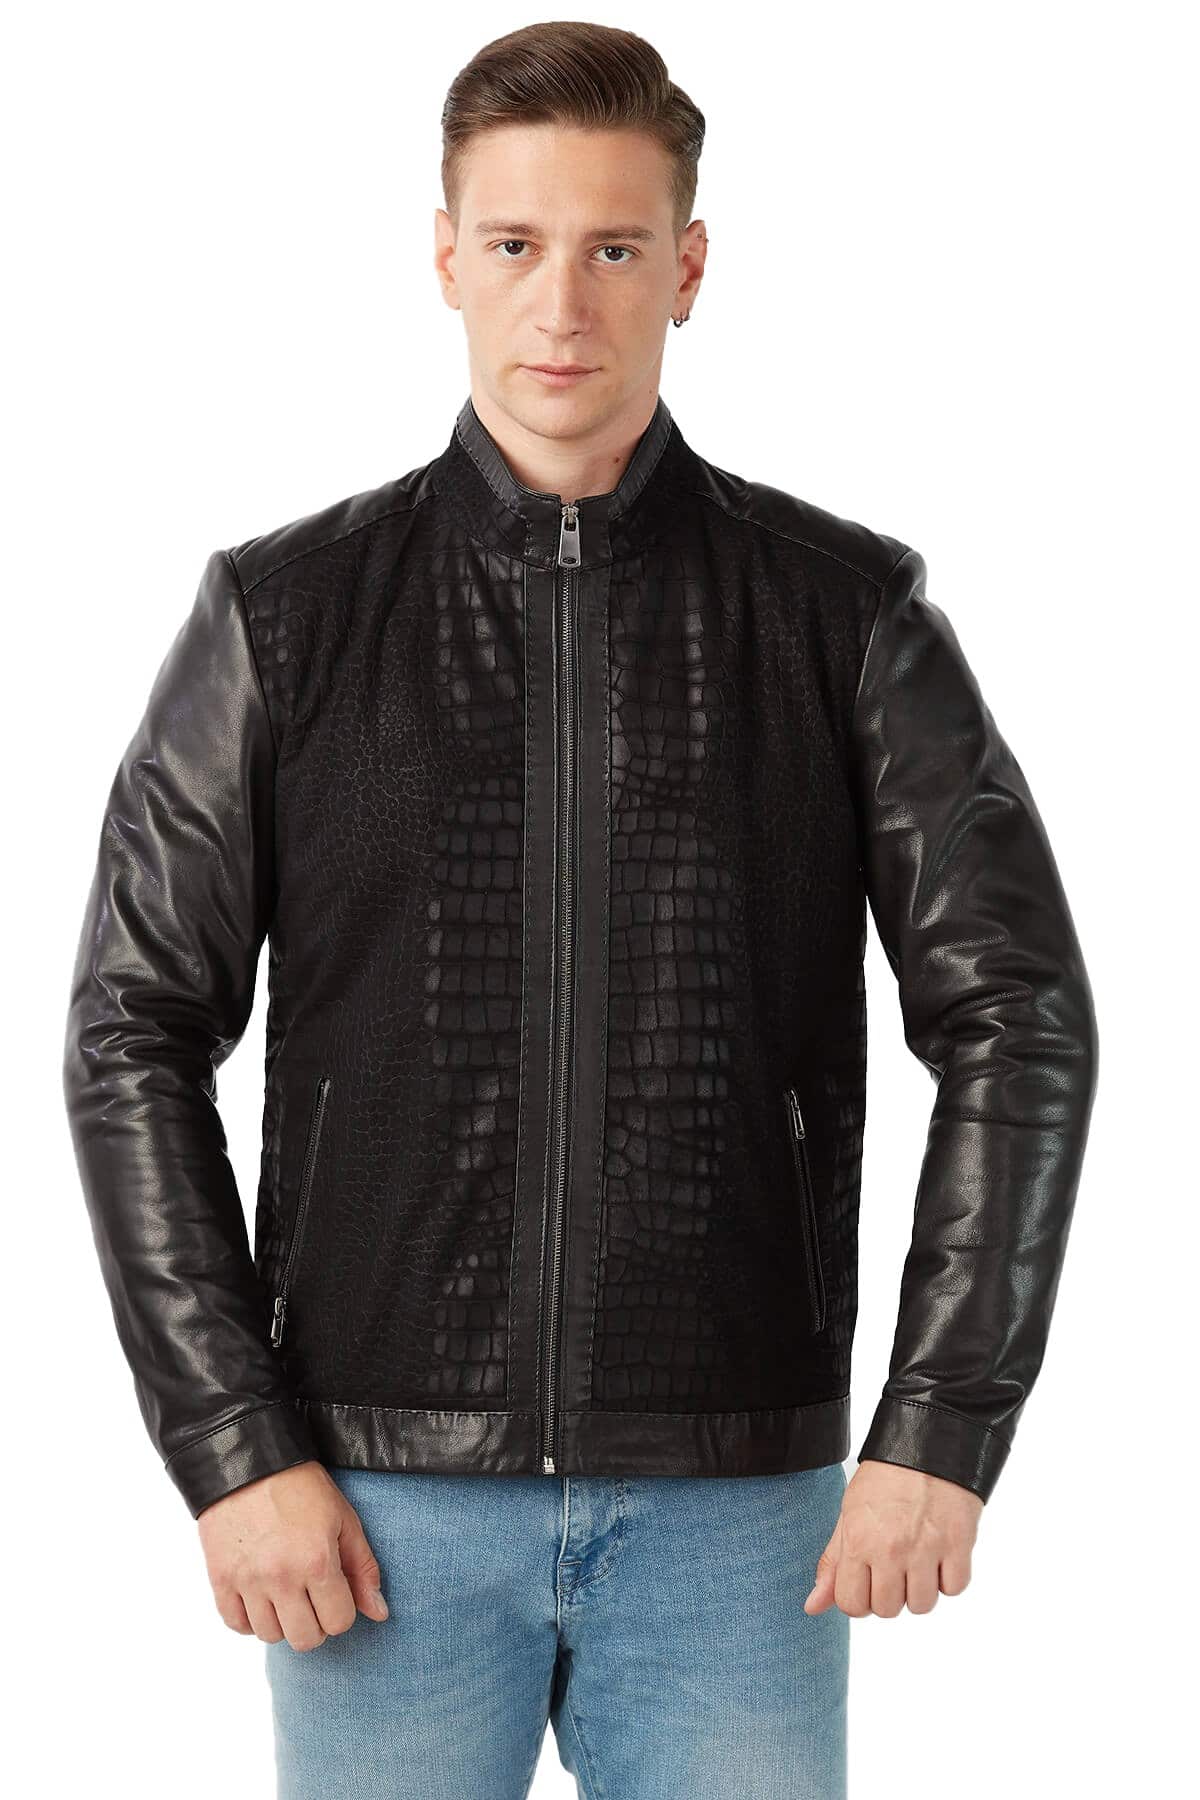 Alligator Jackets for Men  Jackets, Leather jacket men style